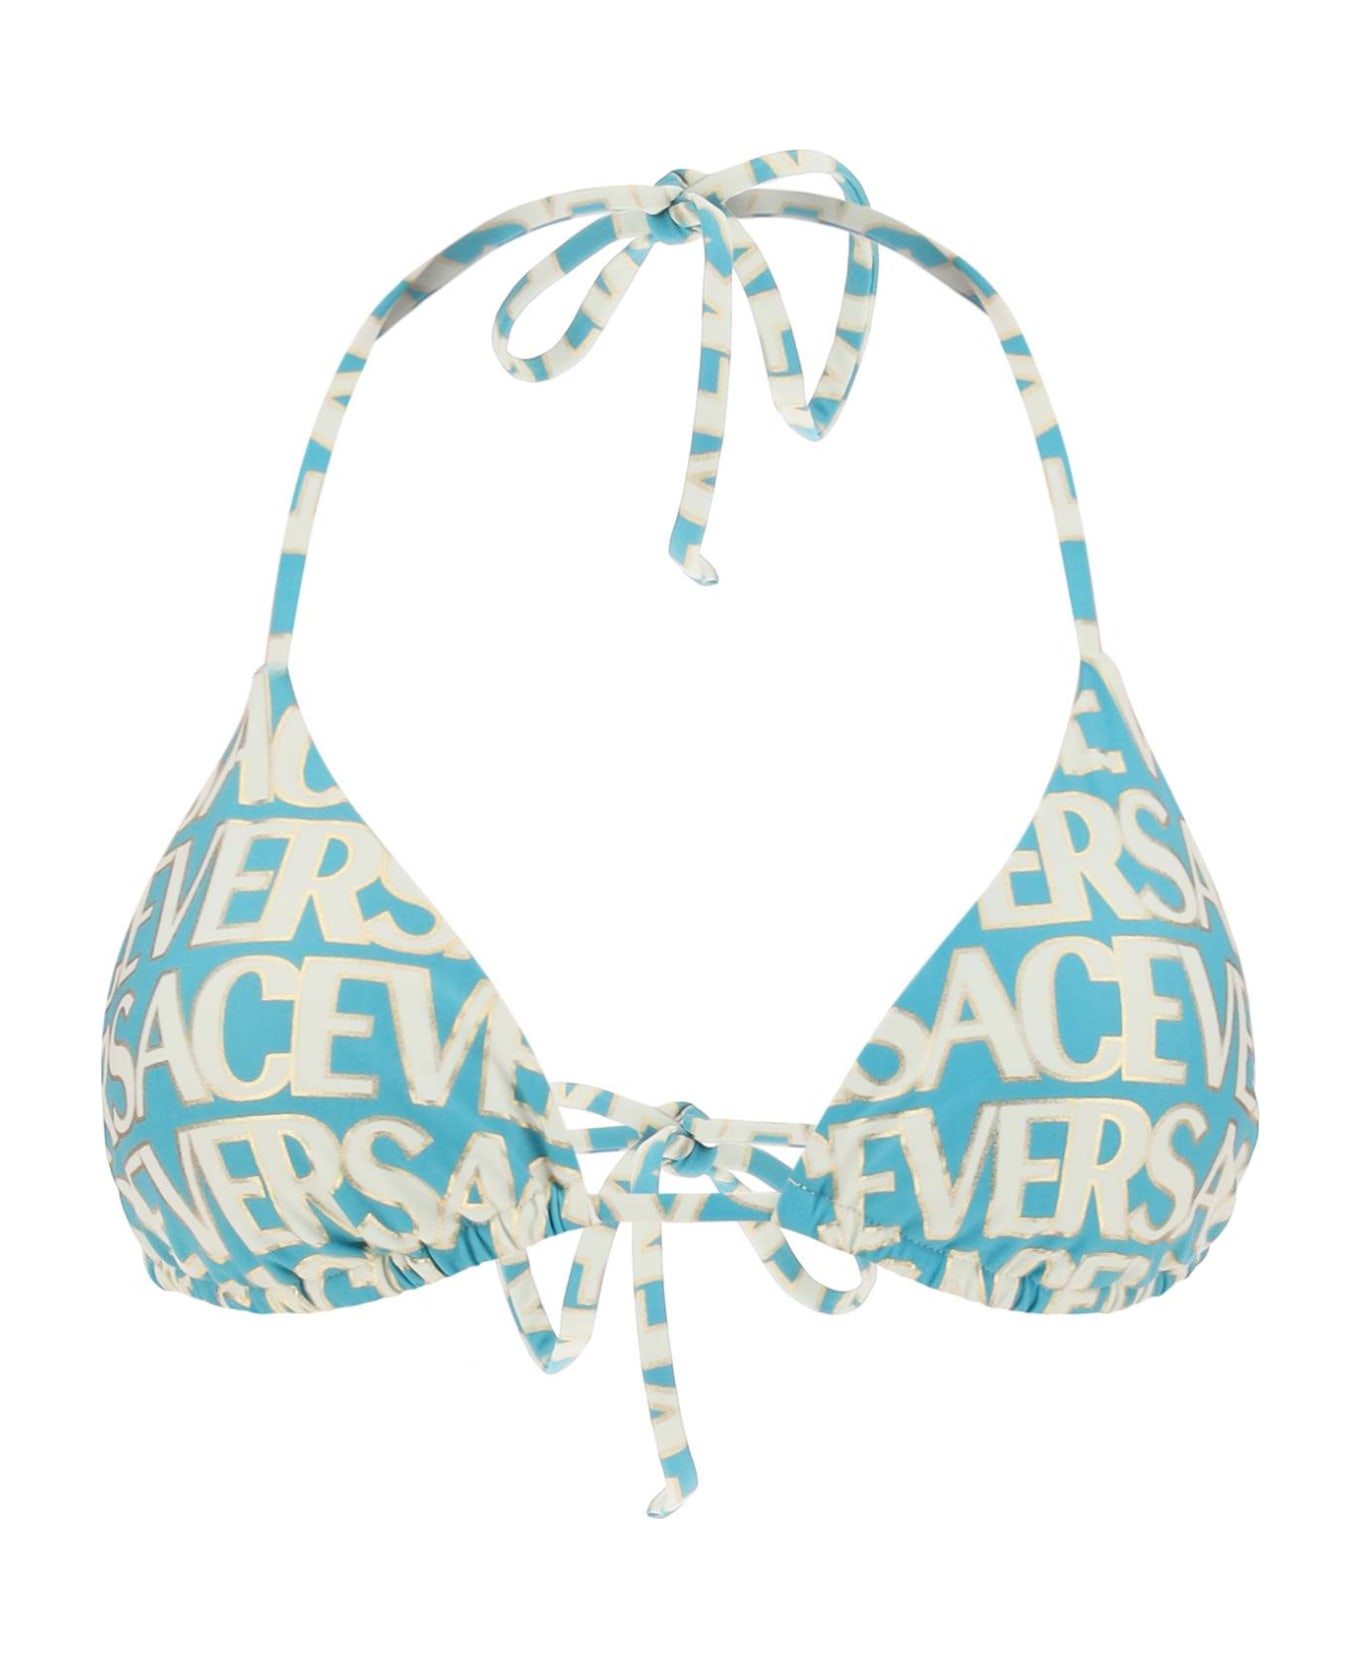 Versace Allover Bikini Top - TURQUOISE AVORY (Light blue) ビキニ